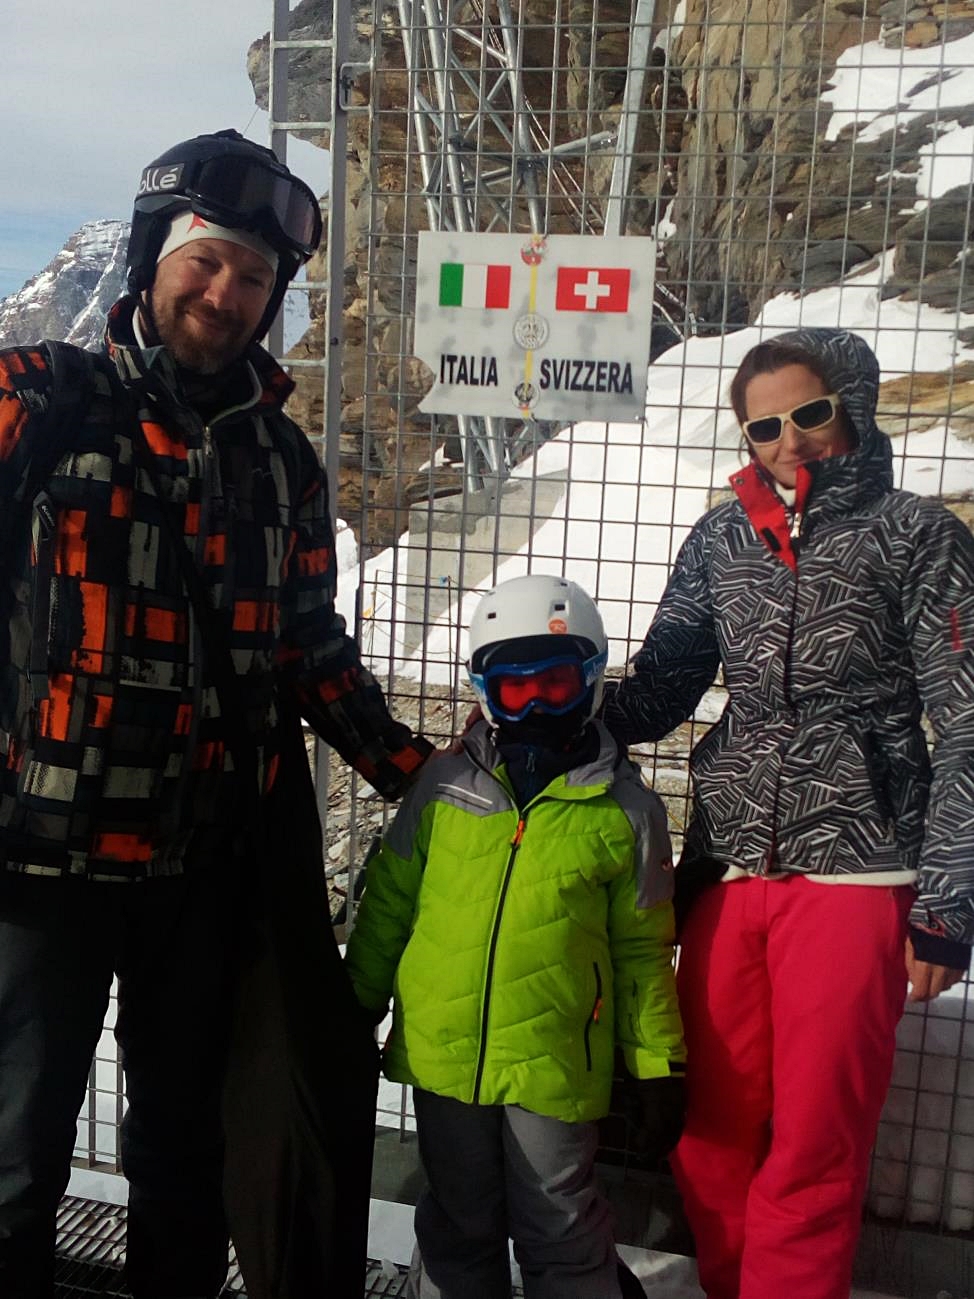 My family and I at the Italian - Swiss mountain border